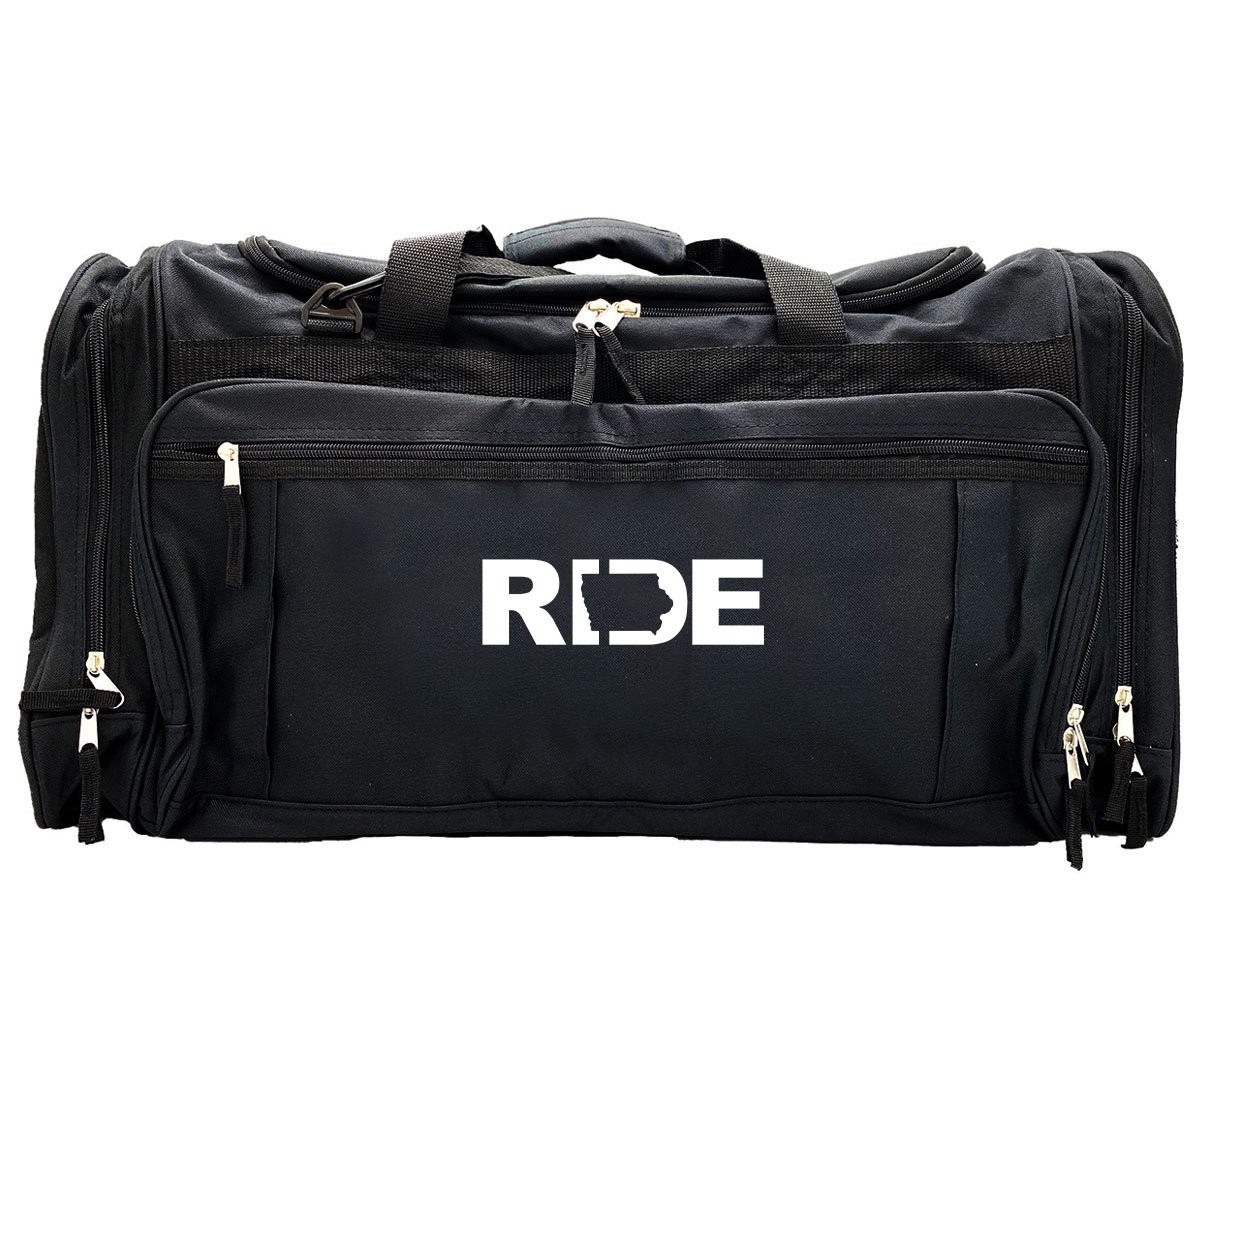 Ride Iowa Classic Explorer Large Duffel Bag Black (White Logo)